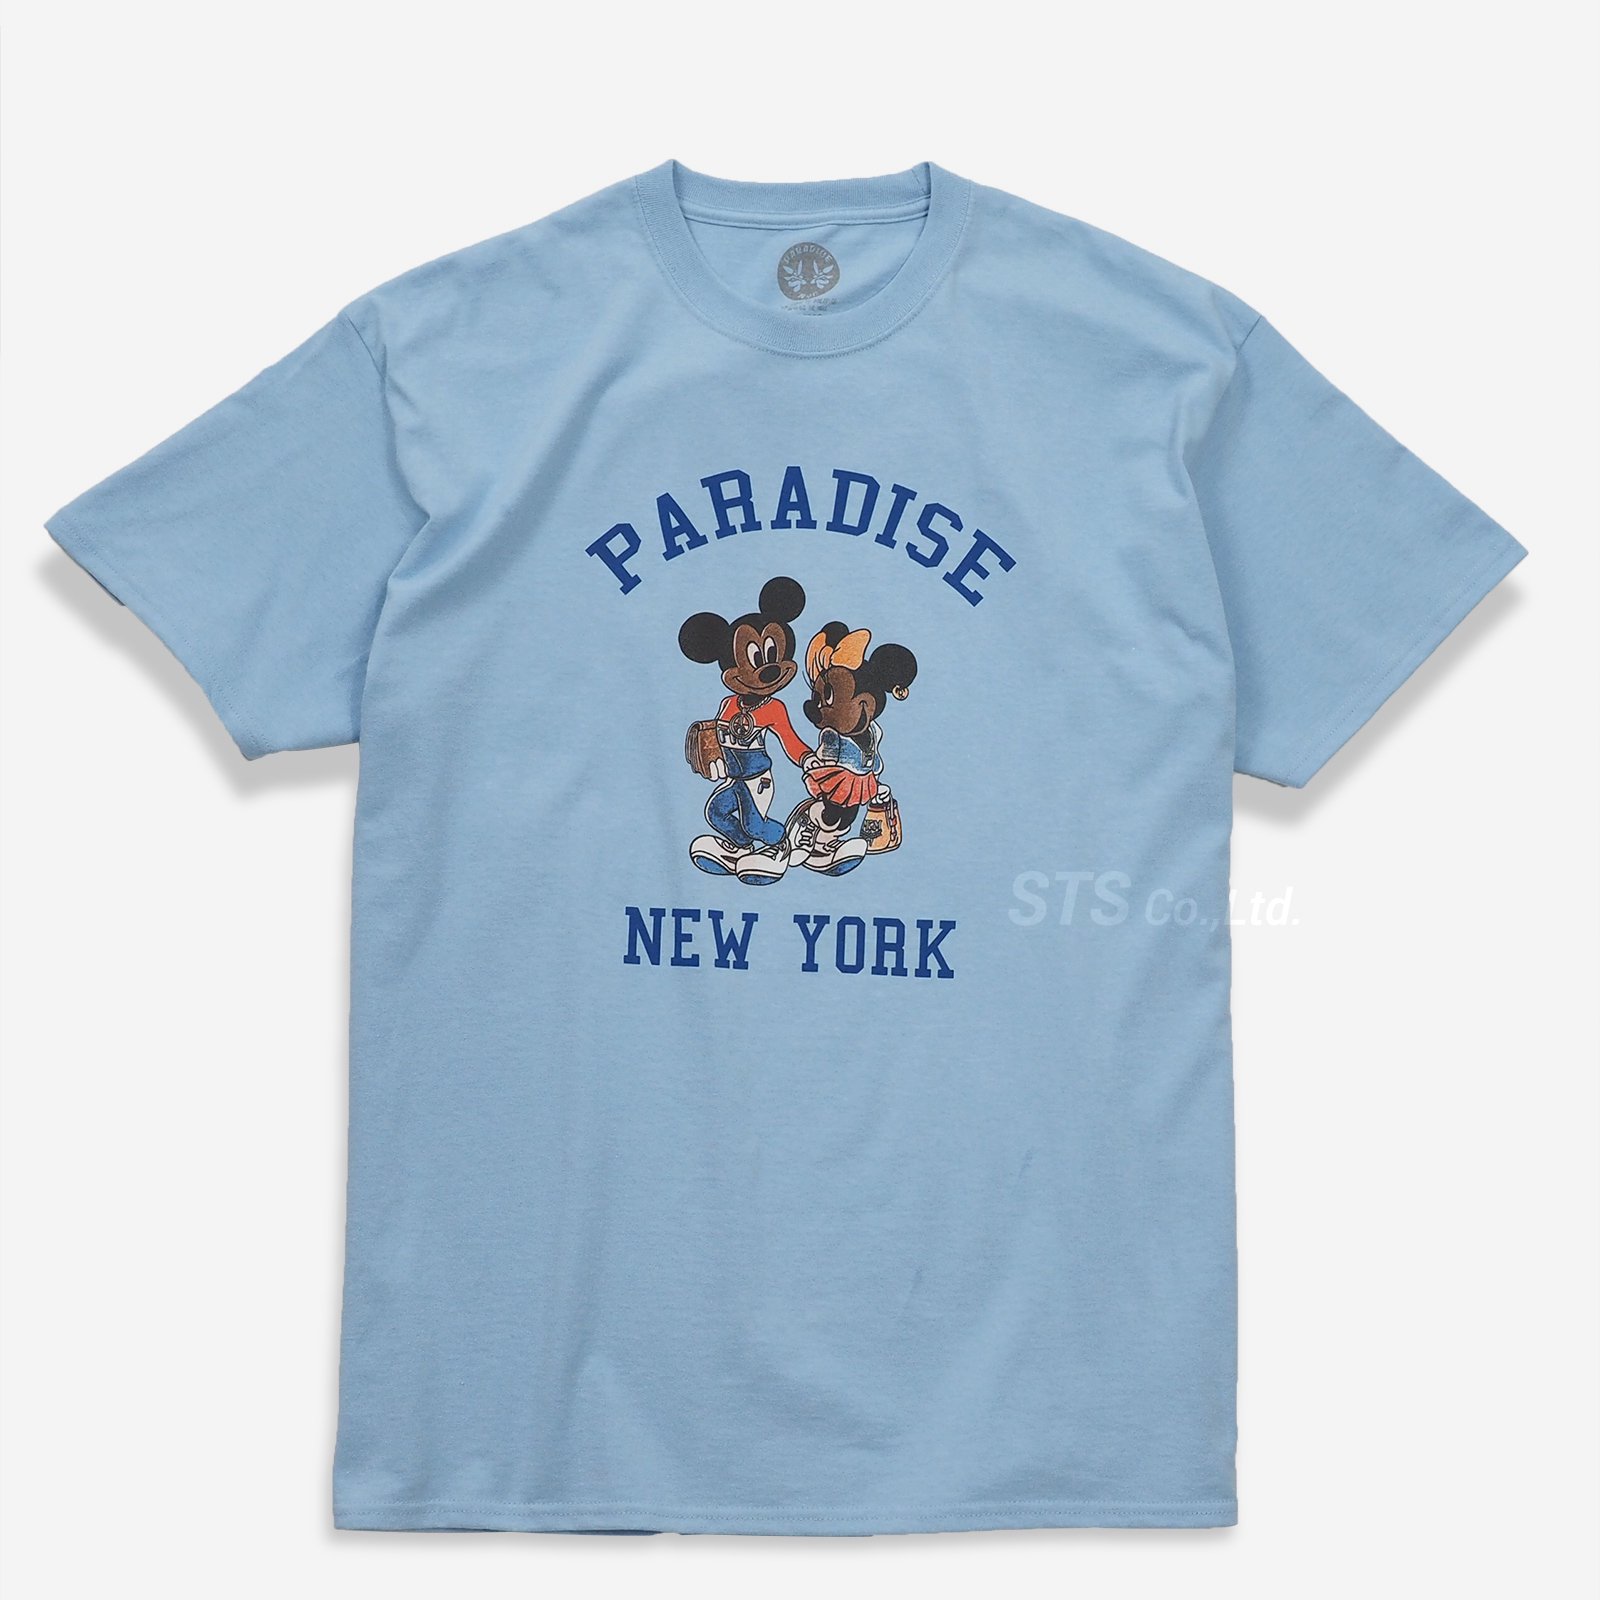 Paradis3 - Mickey and Minnie Tee - ParkSIDER